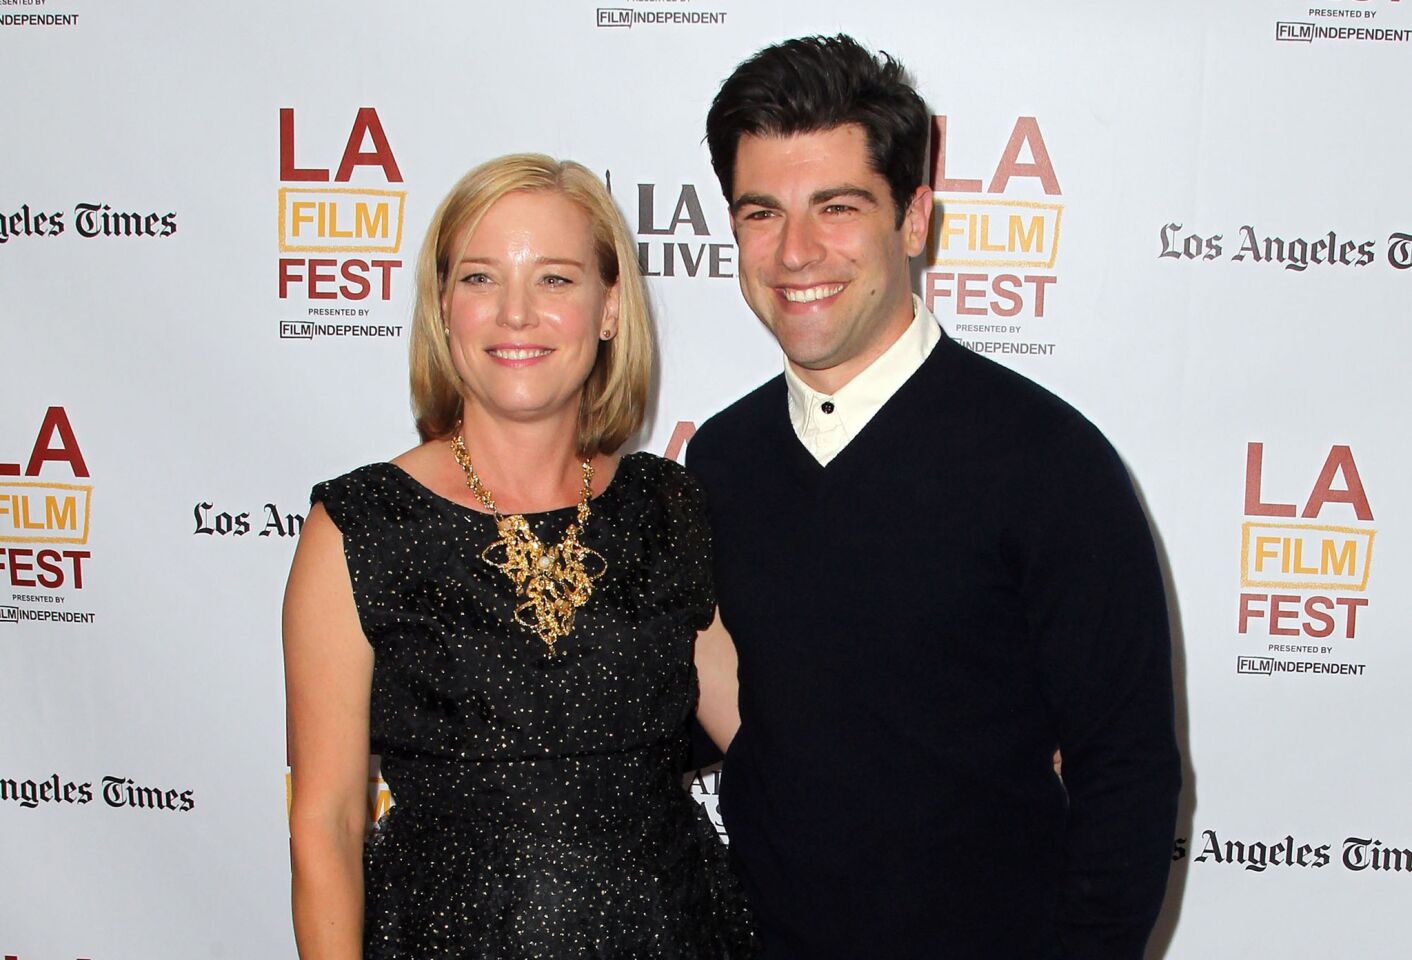 Los Angeles Film Festival 2014